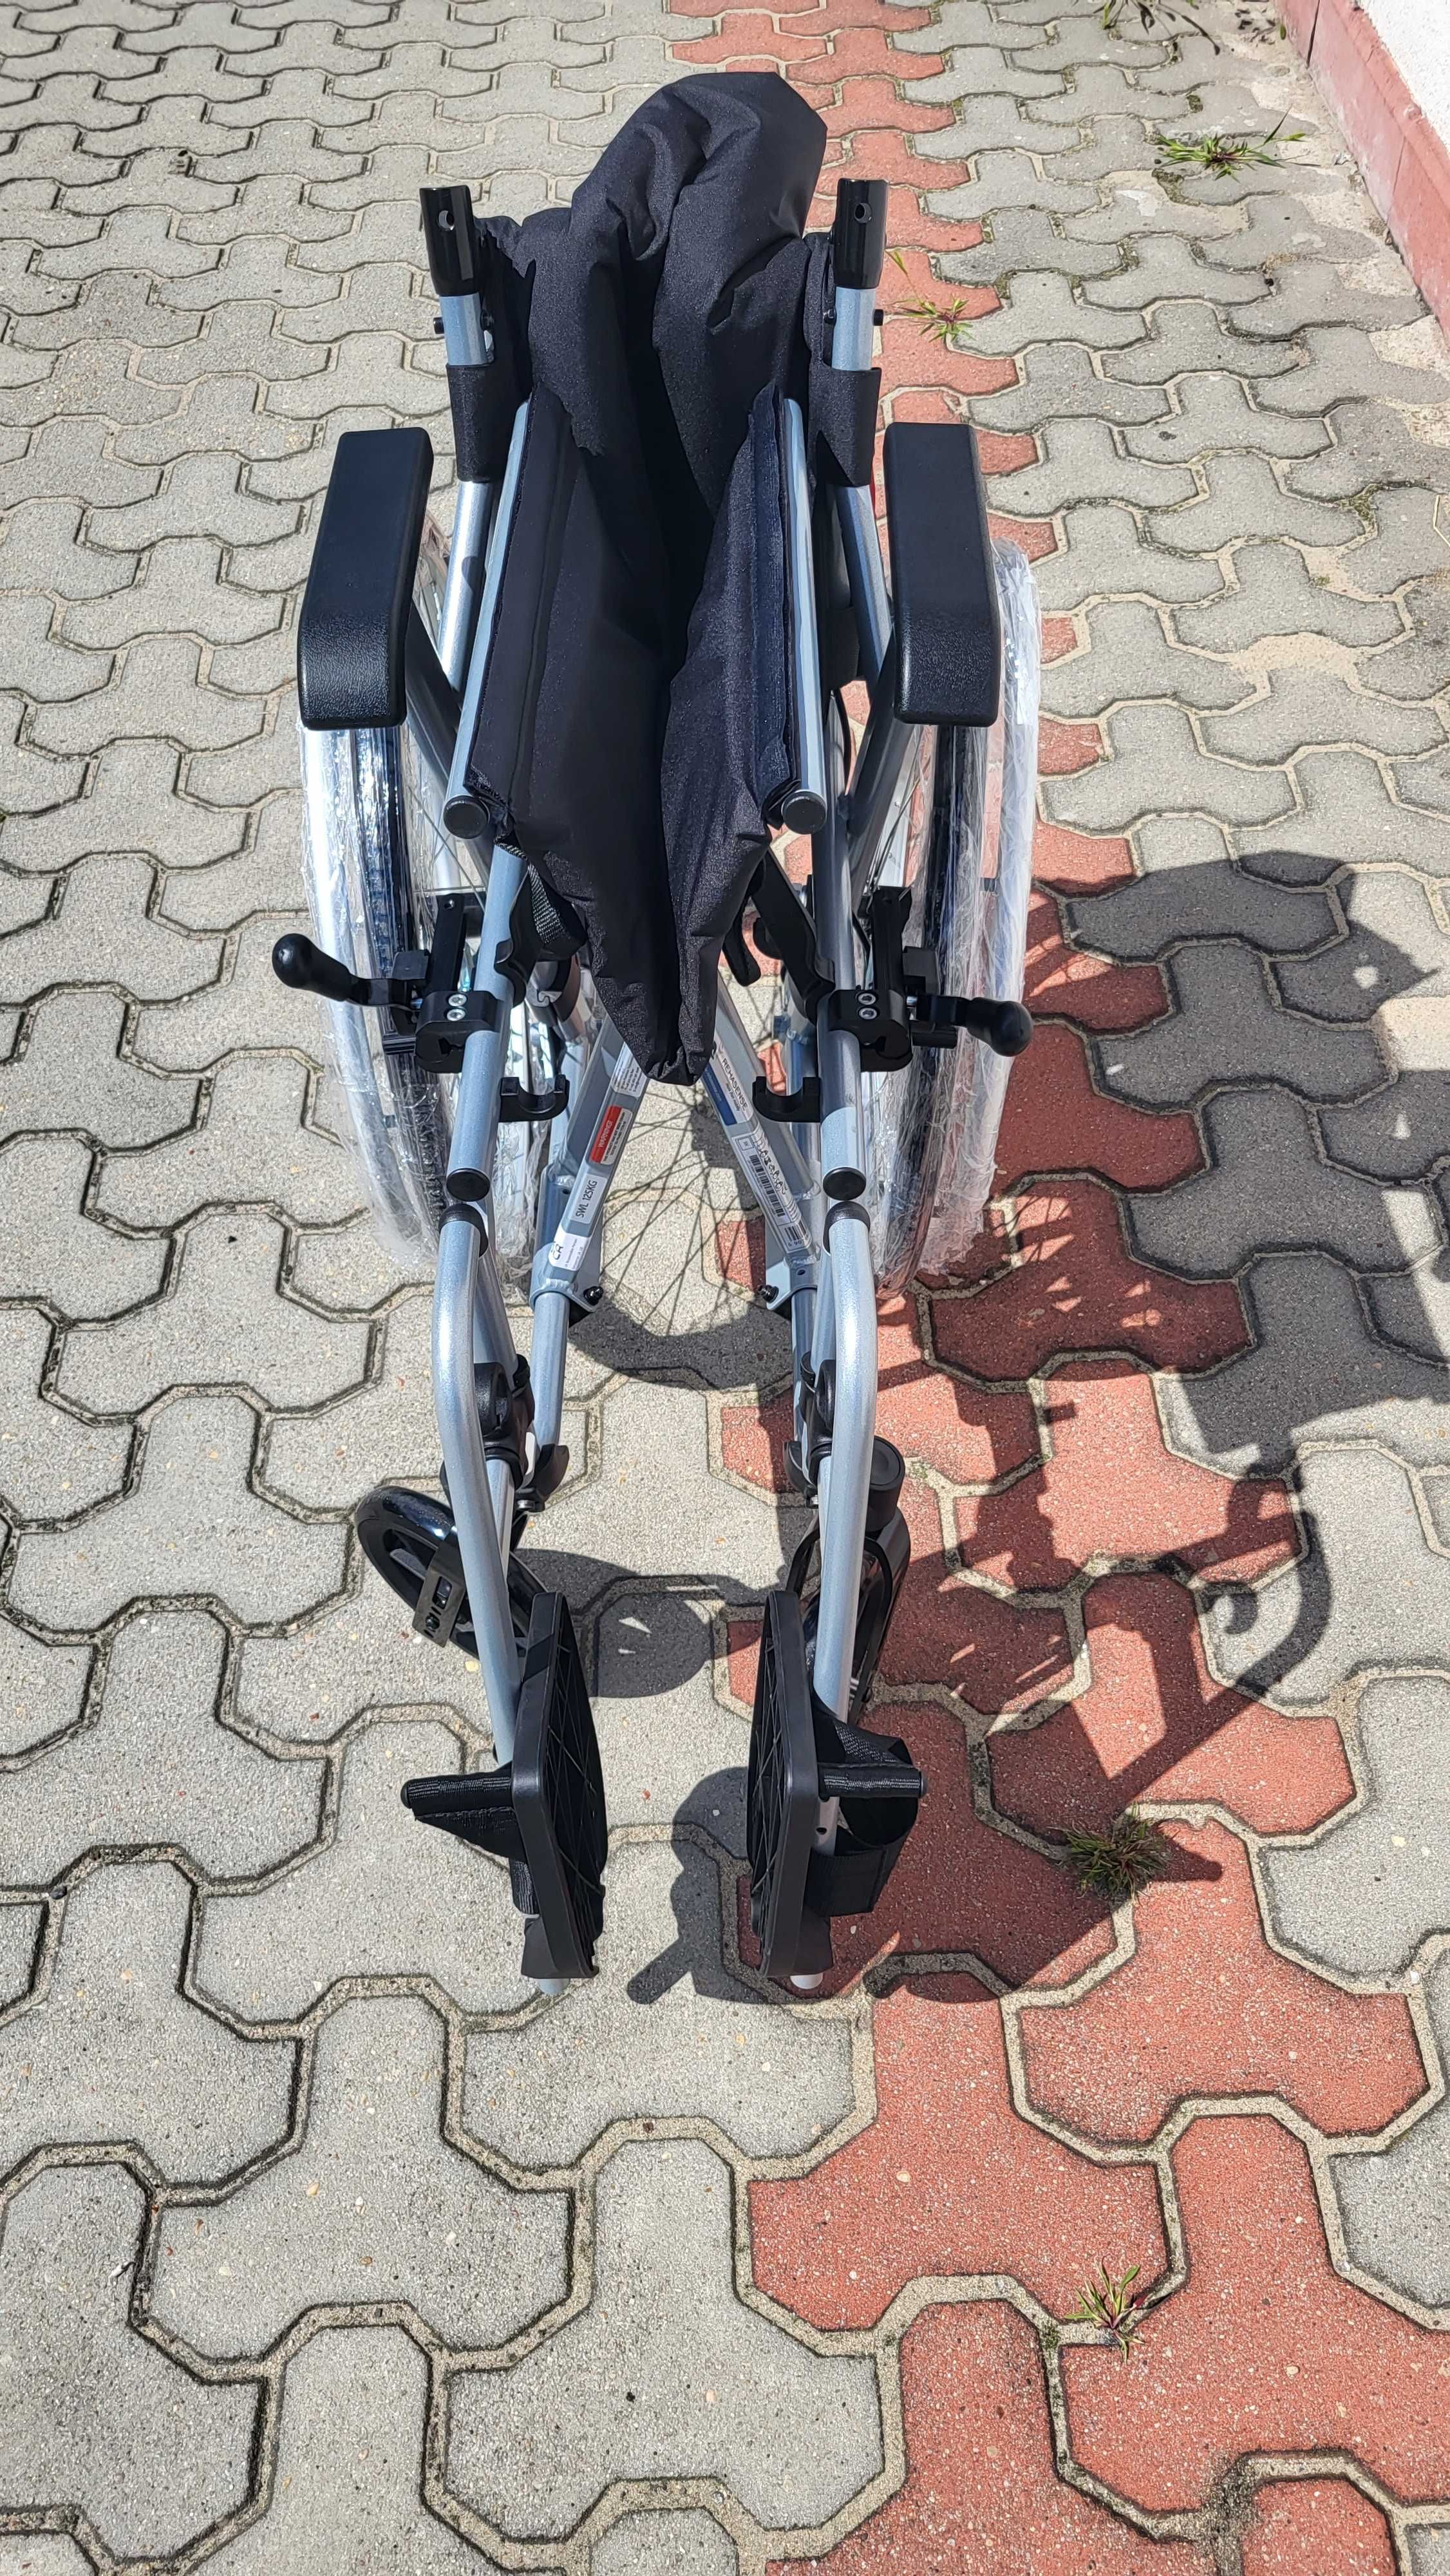 Ultralekki wózek inwalidzki Rehasense ICON 35BX Dofinansowanie NFZ!